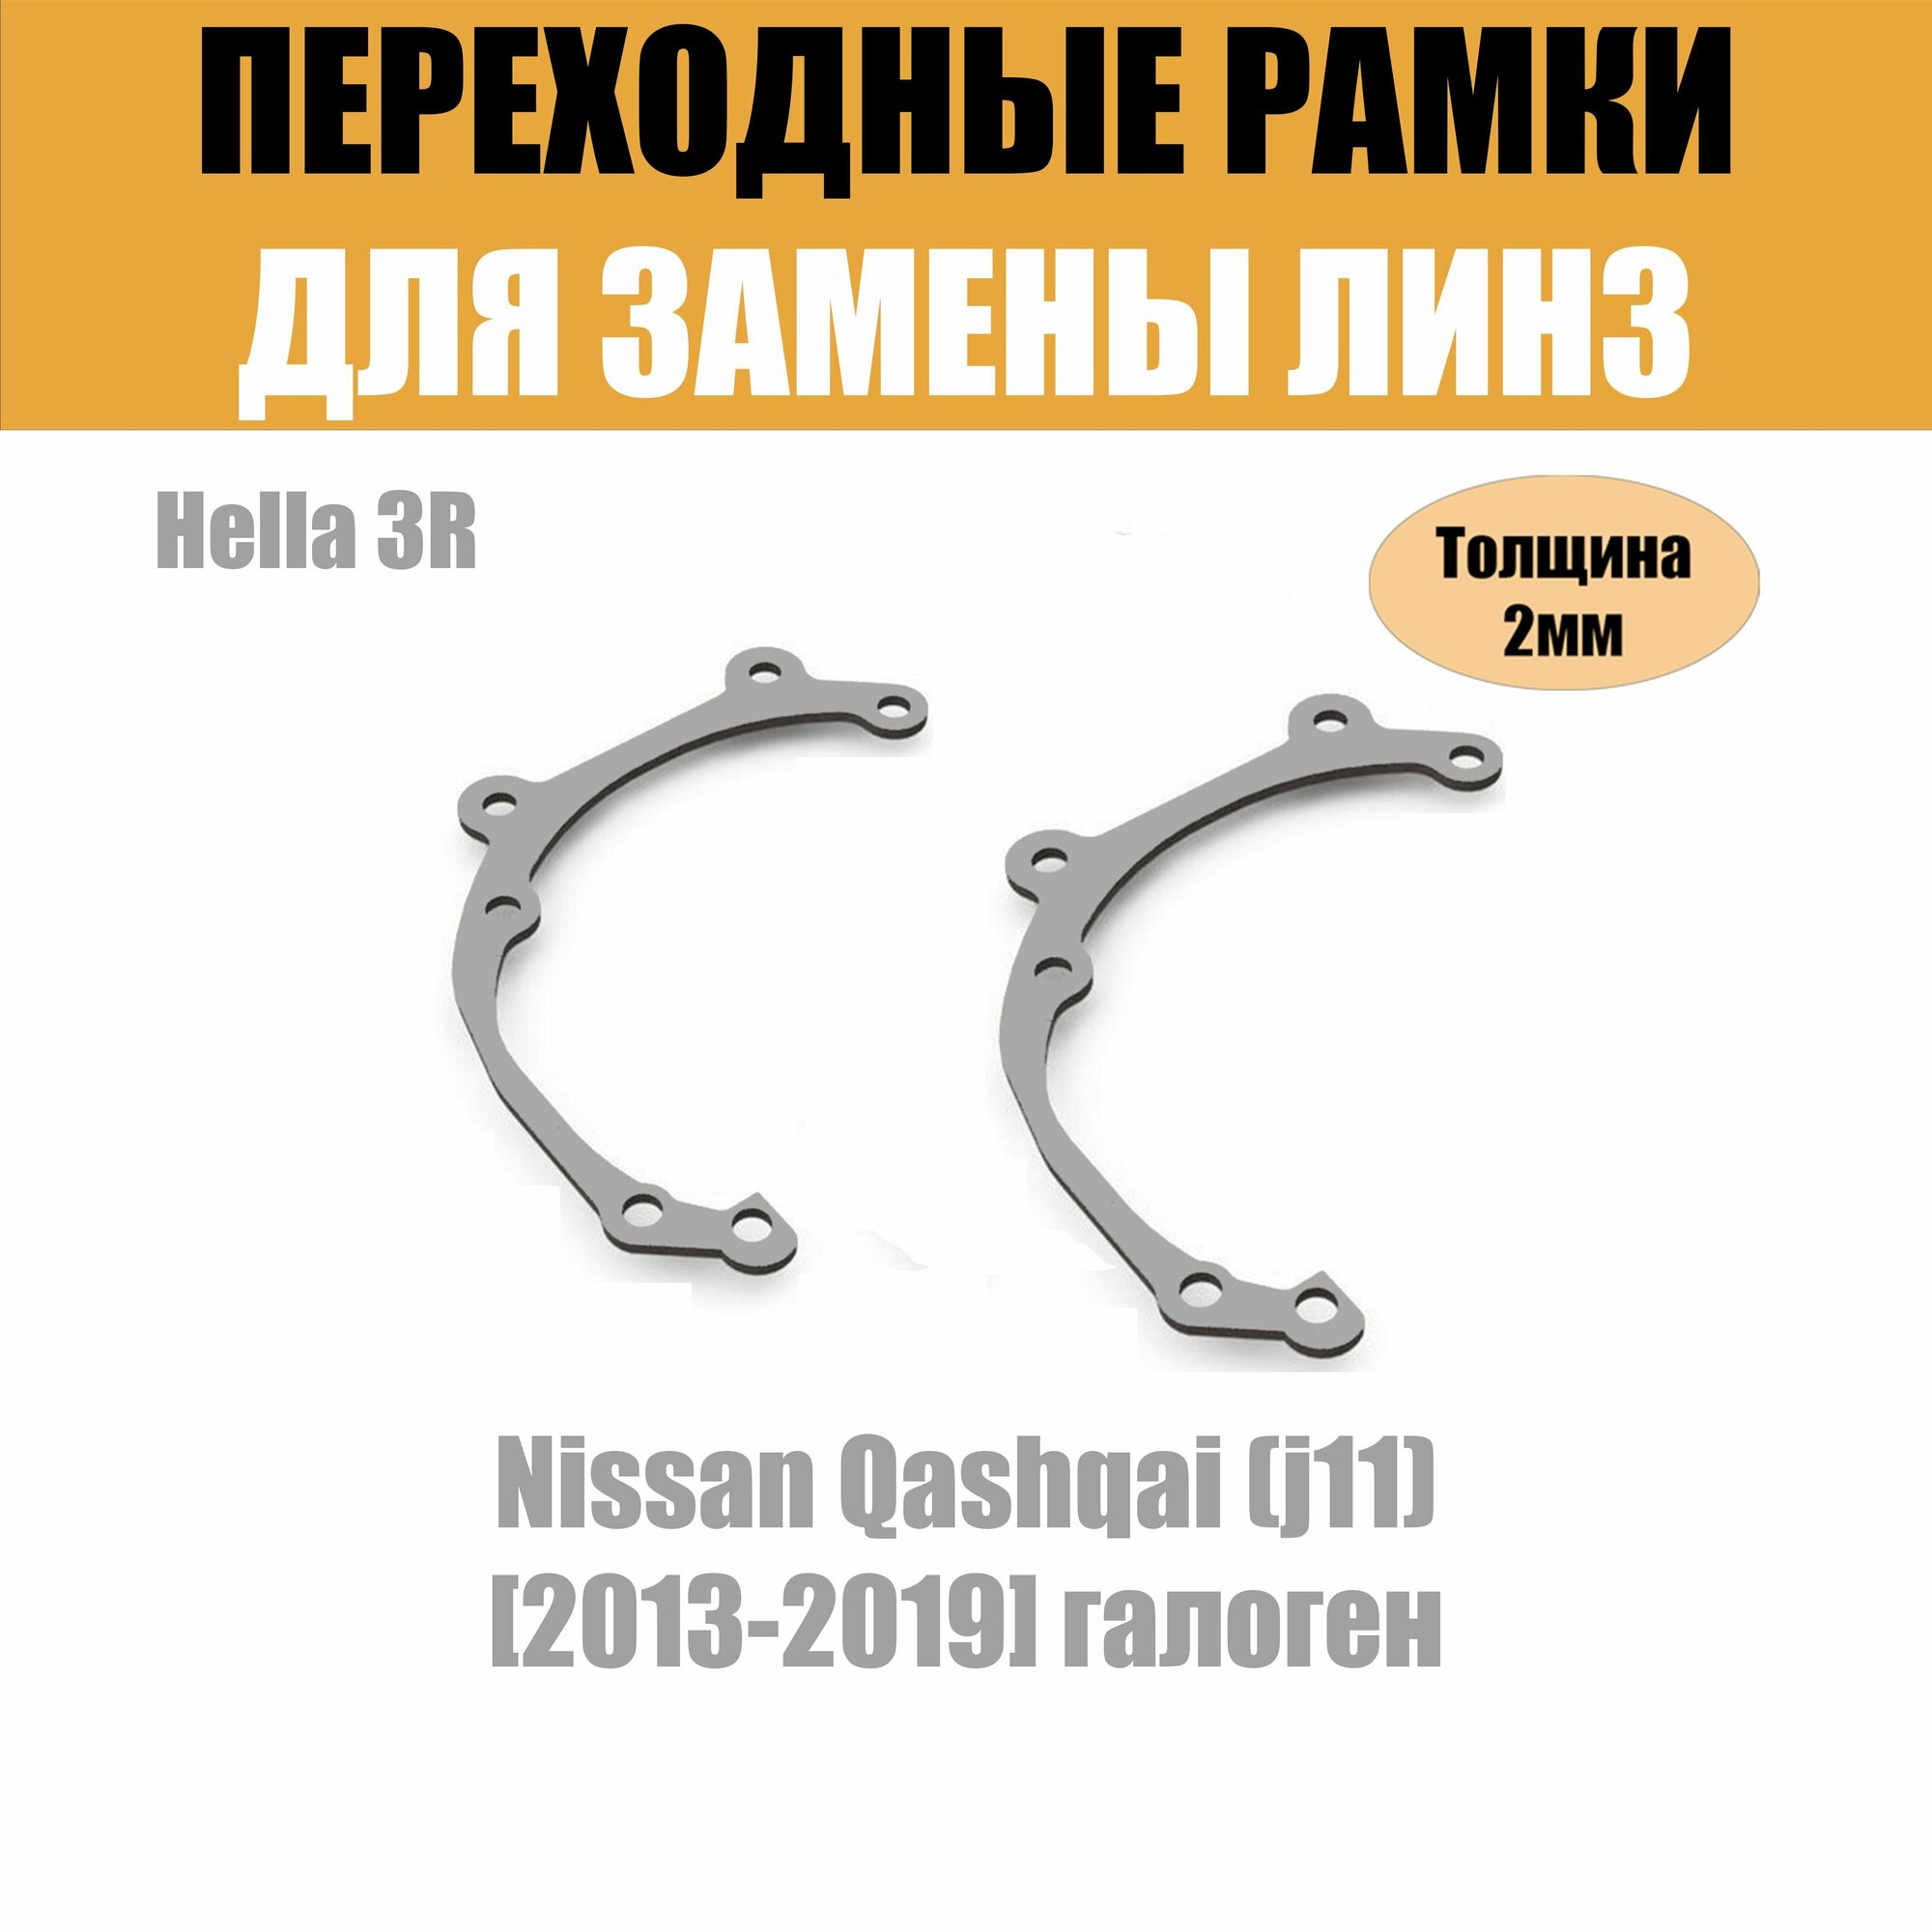 Переходные рамки для Nissan Qashqai (j11) (2013-2019) галоген под модуль Hella 3R/Hella 3 (Комплект 2шт)